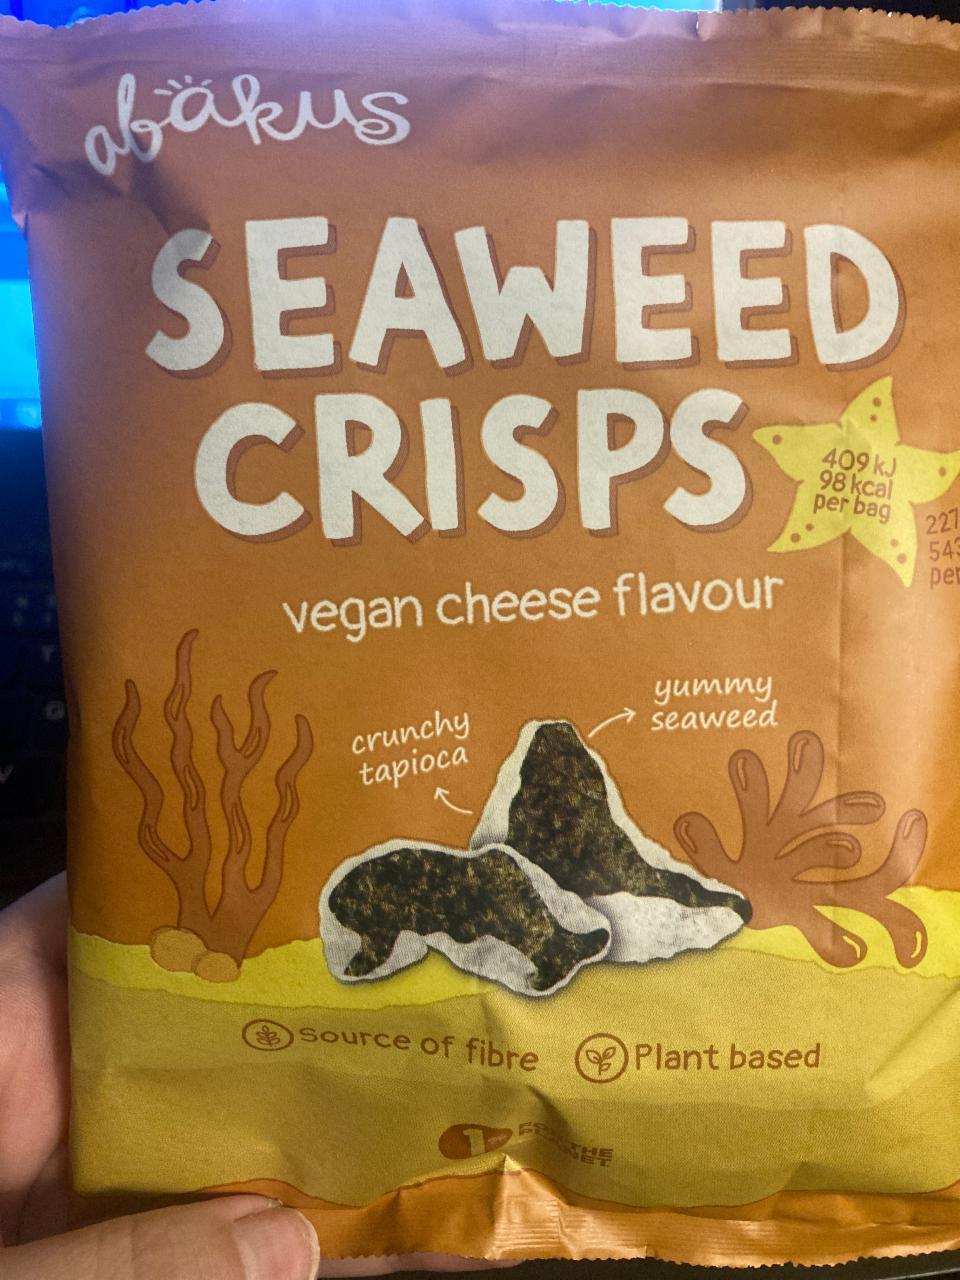 Fotografie - Seaweed Crisps vegan cheese flavour Abakus